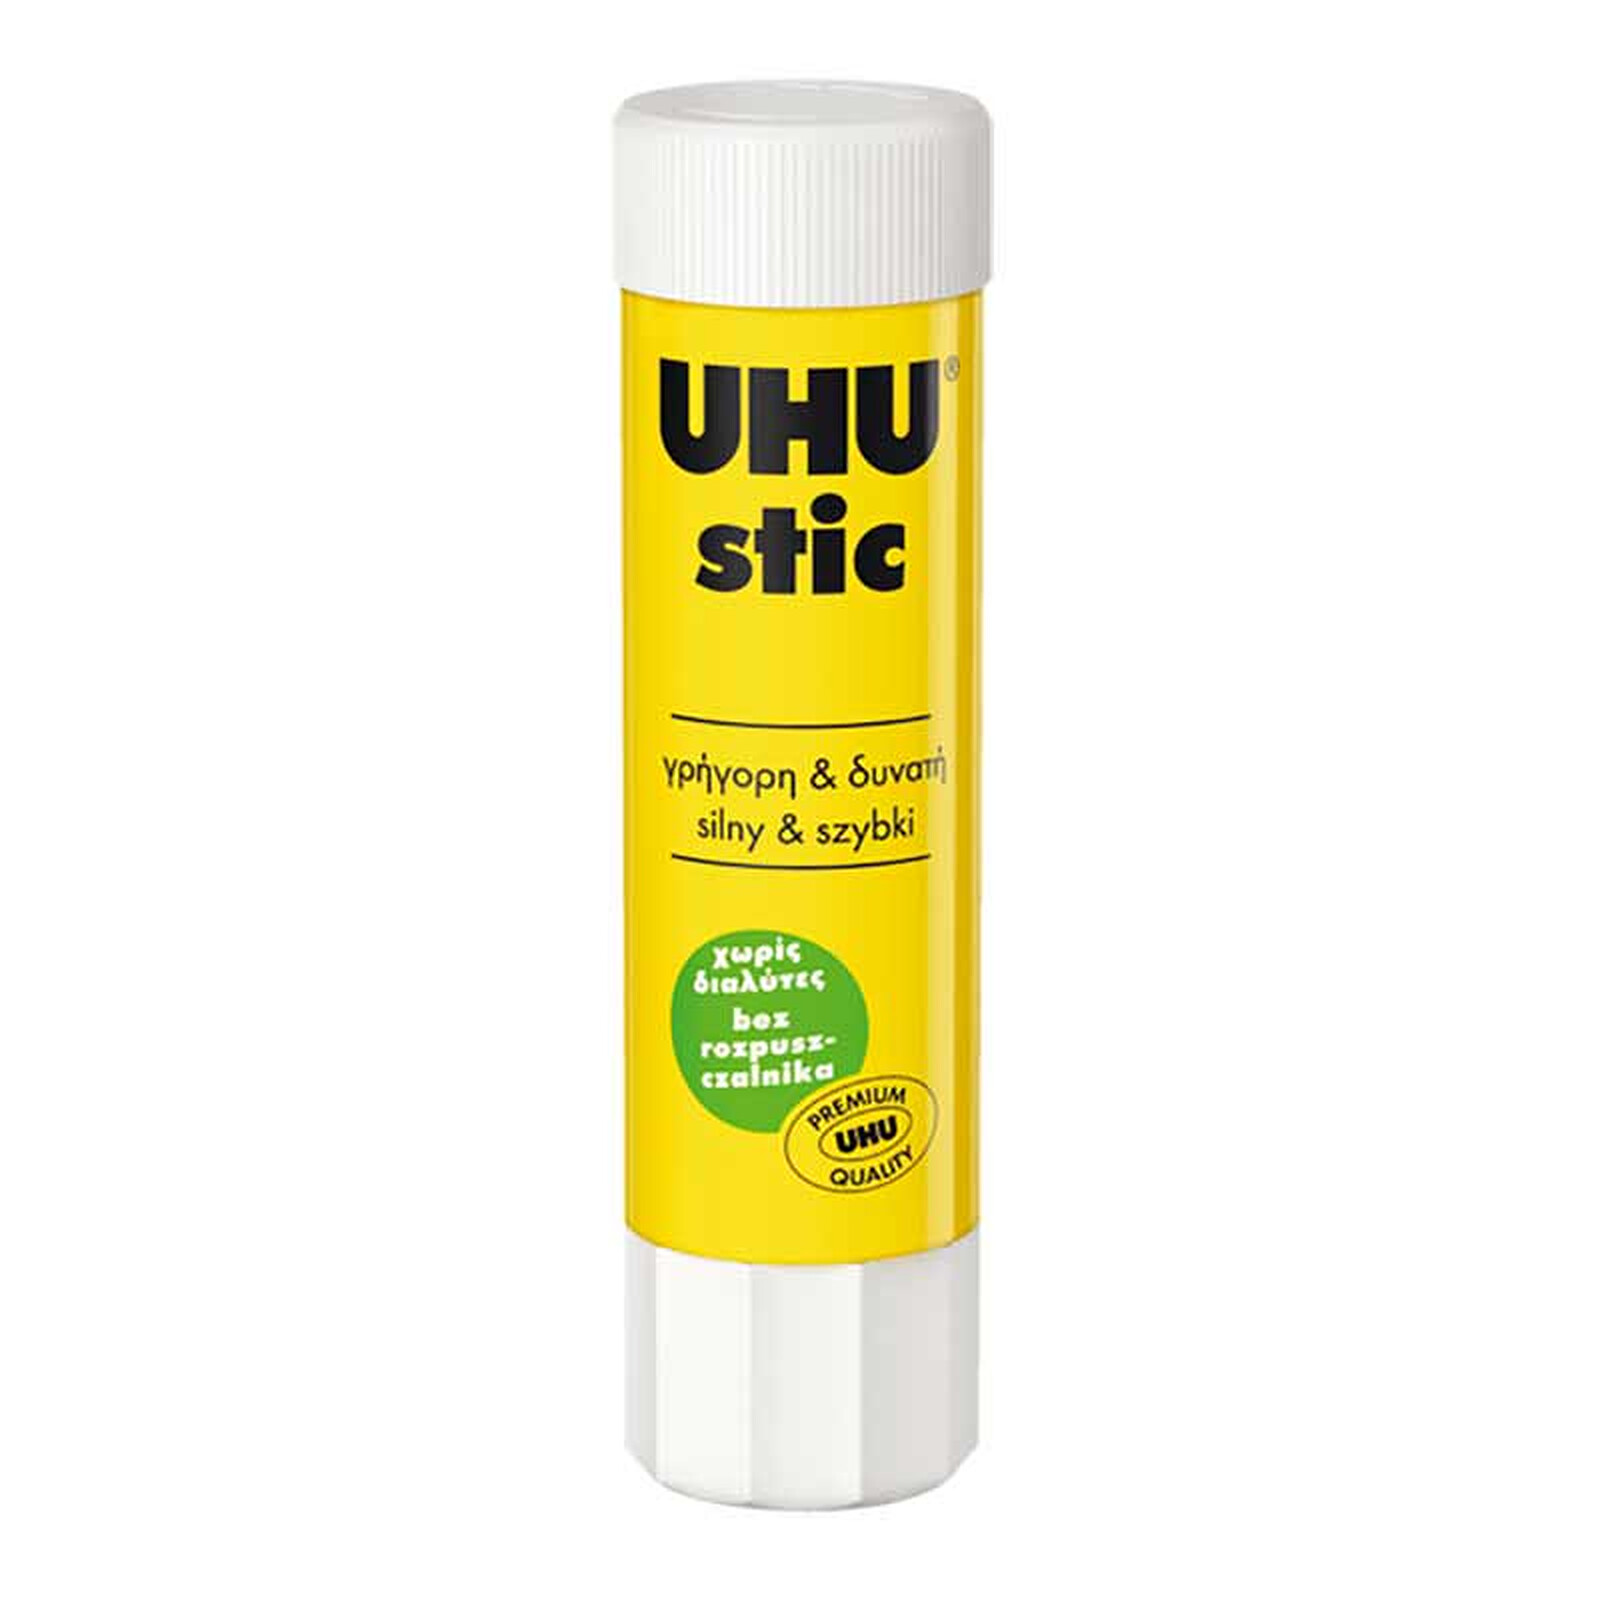 UHU Stic baton de colle 21 g - Ruban adhésif & colle - LDLC